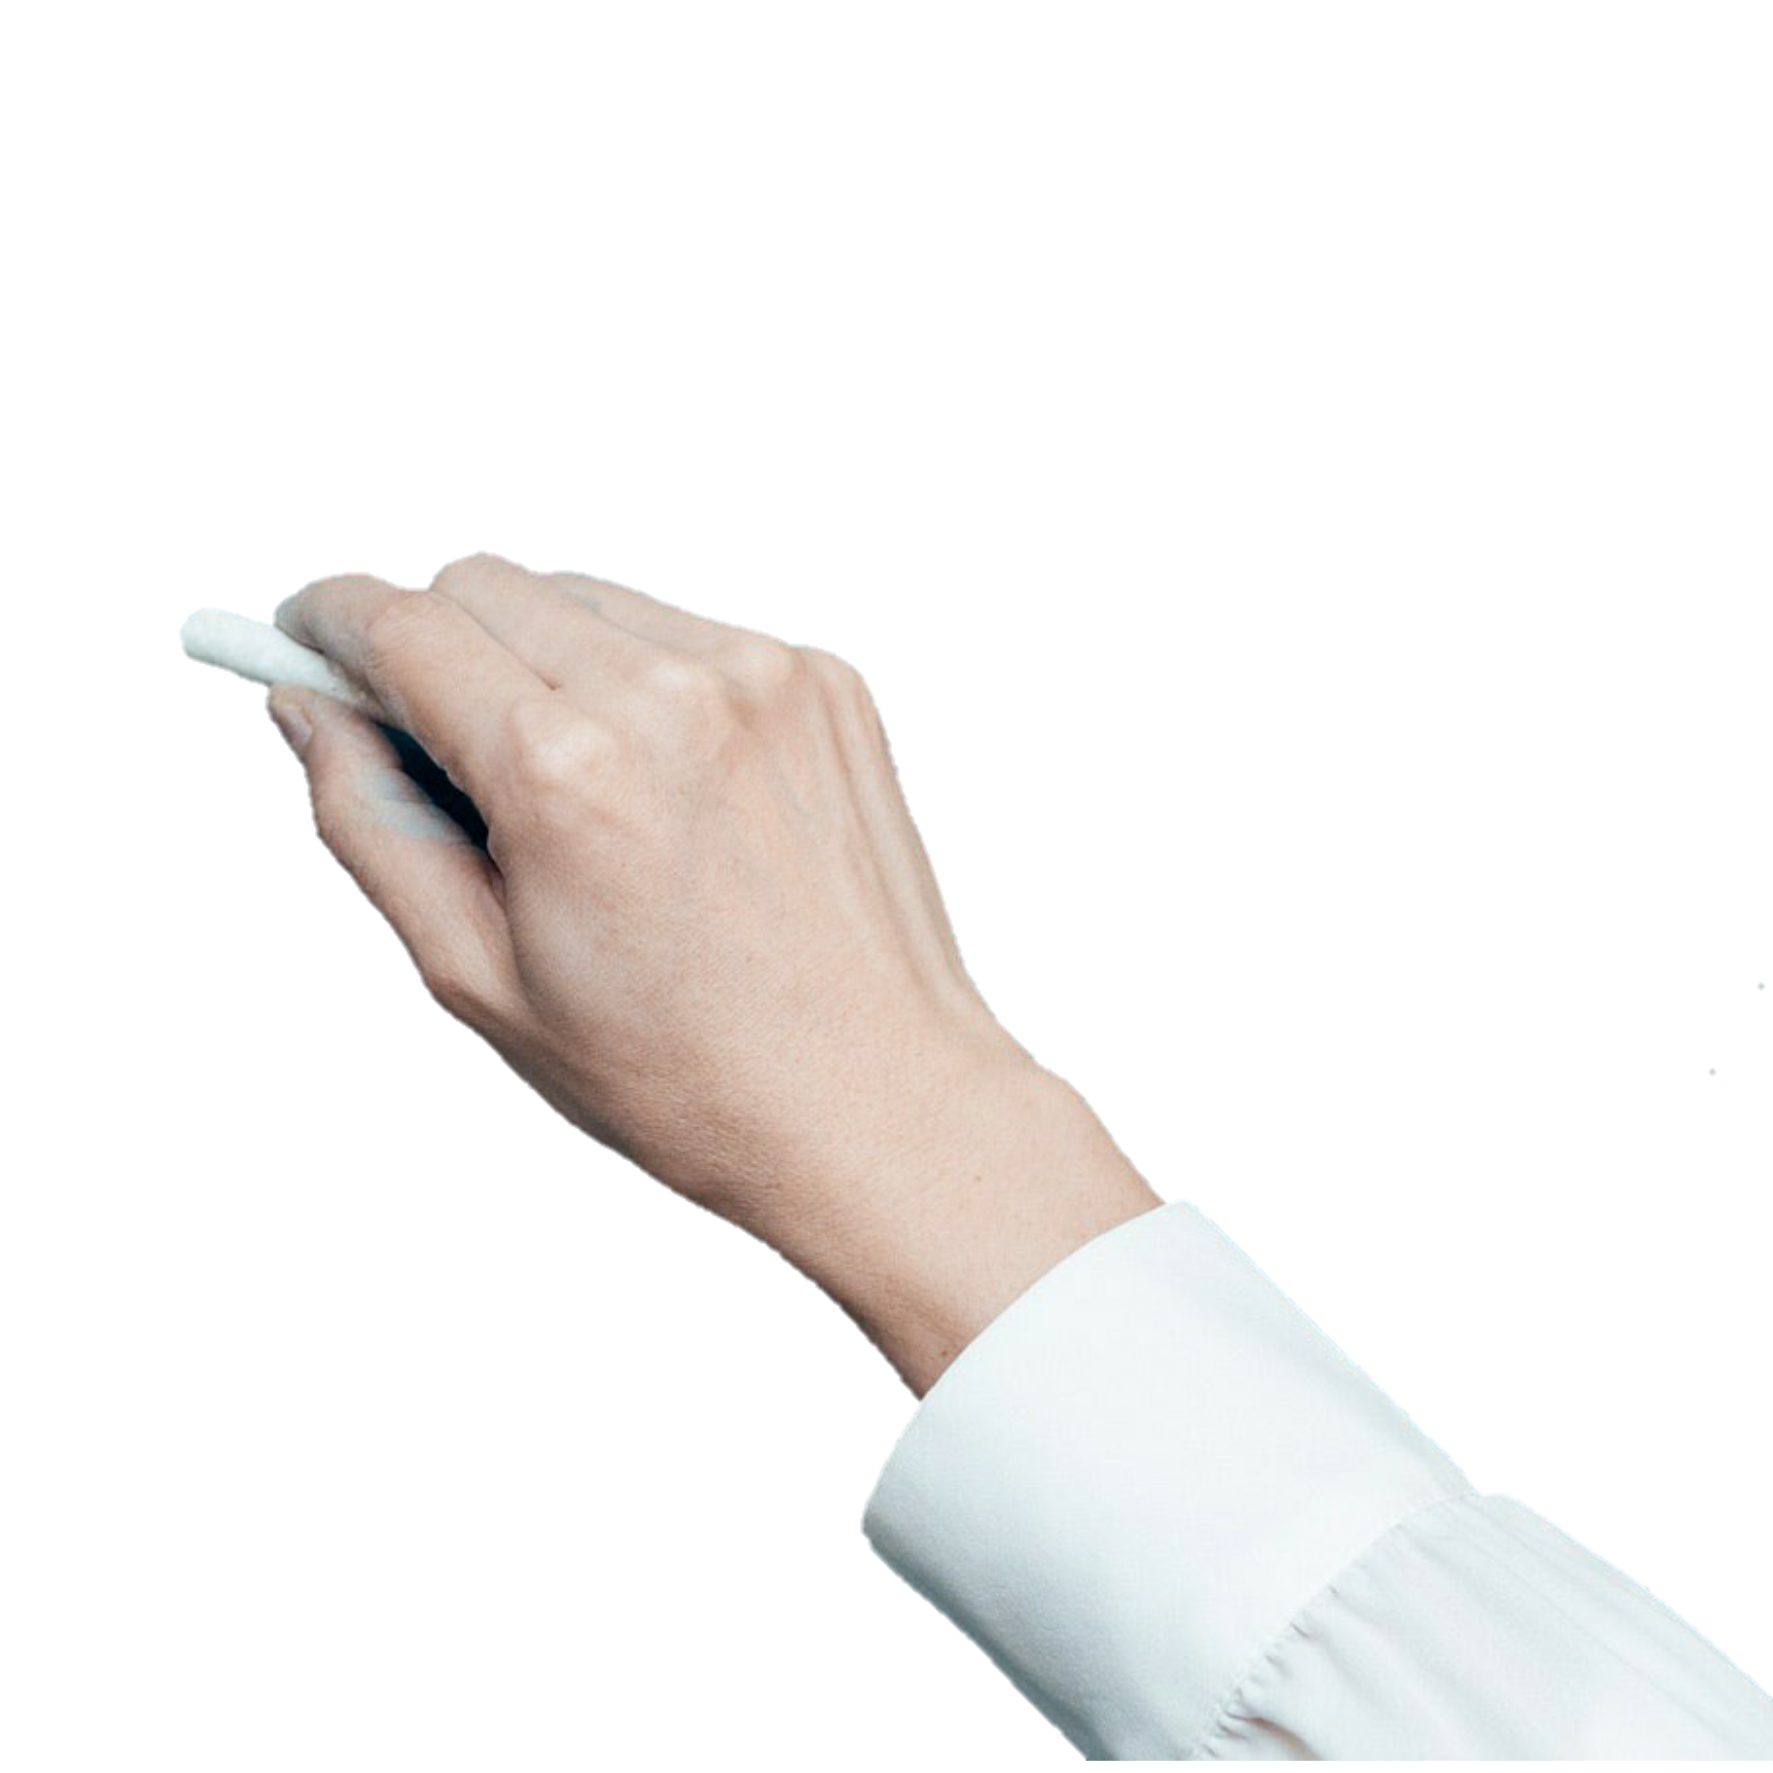 White hand transparent. Hand with Chalk. Бел Pro hand. Hand holding Stick. Stick hand